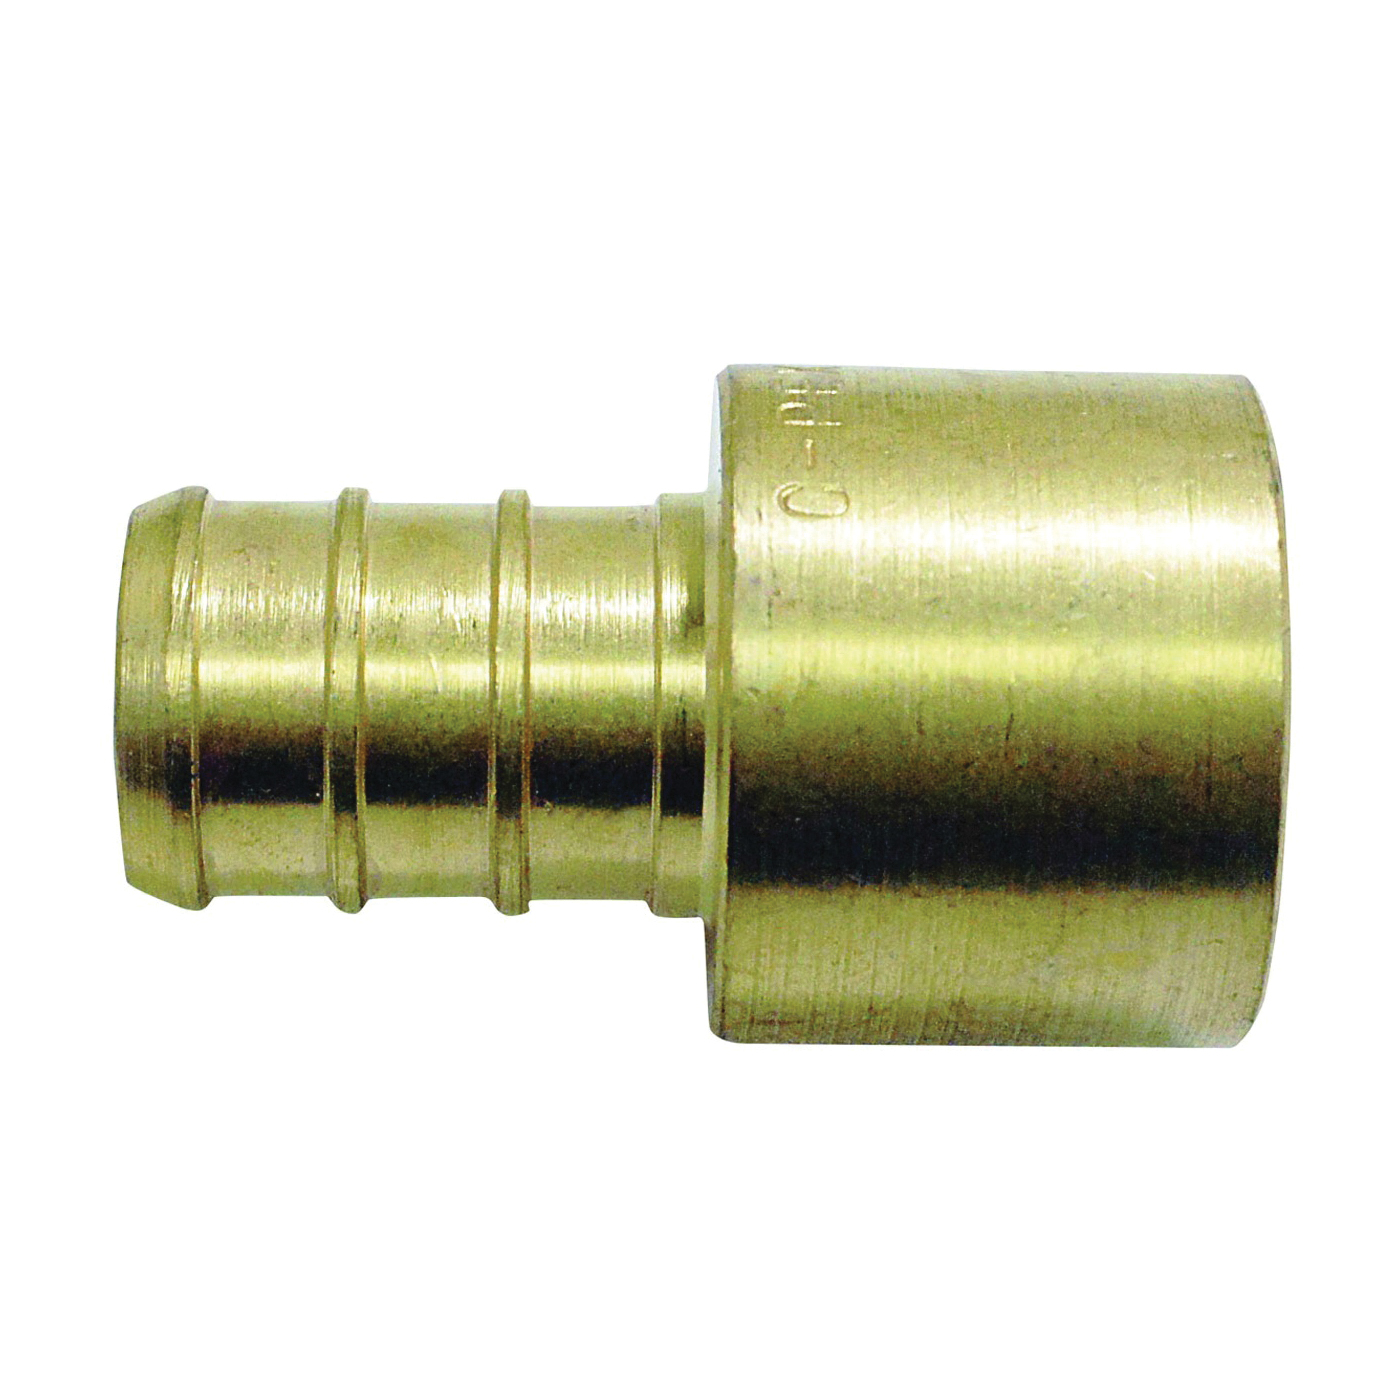 APXFS3434 Pipe Adapter, 3/4 in, PEX x Female Solder, Brass, 200 psi Pressure